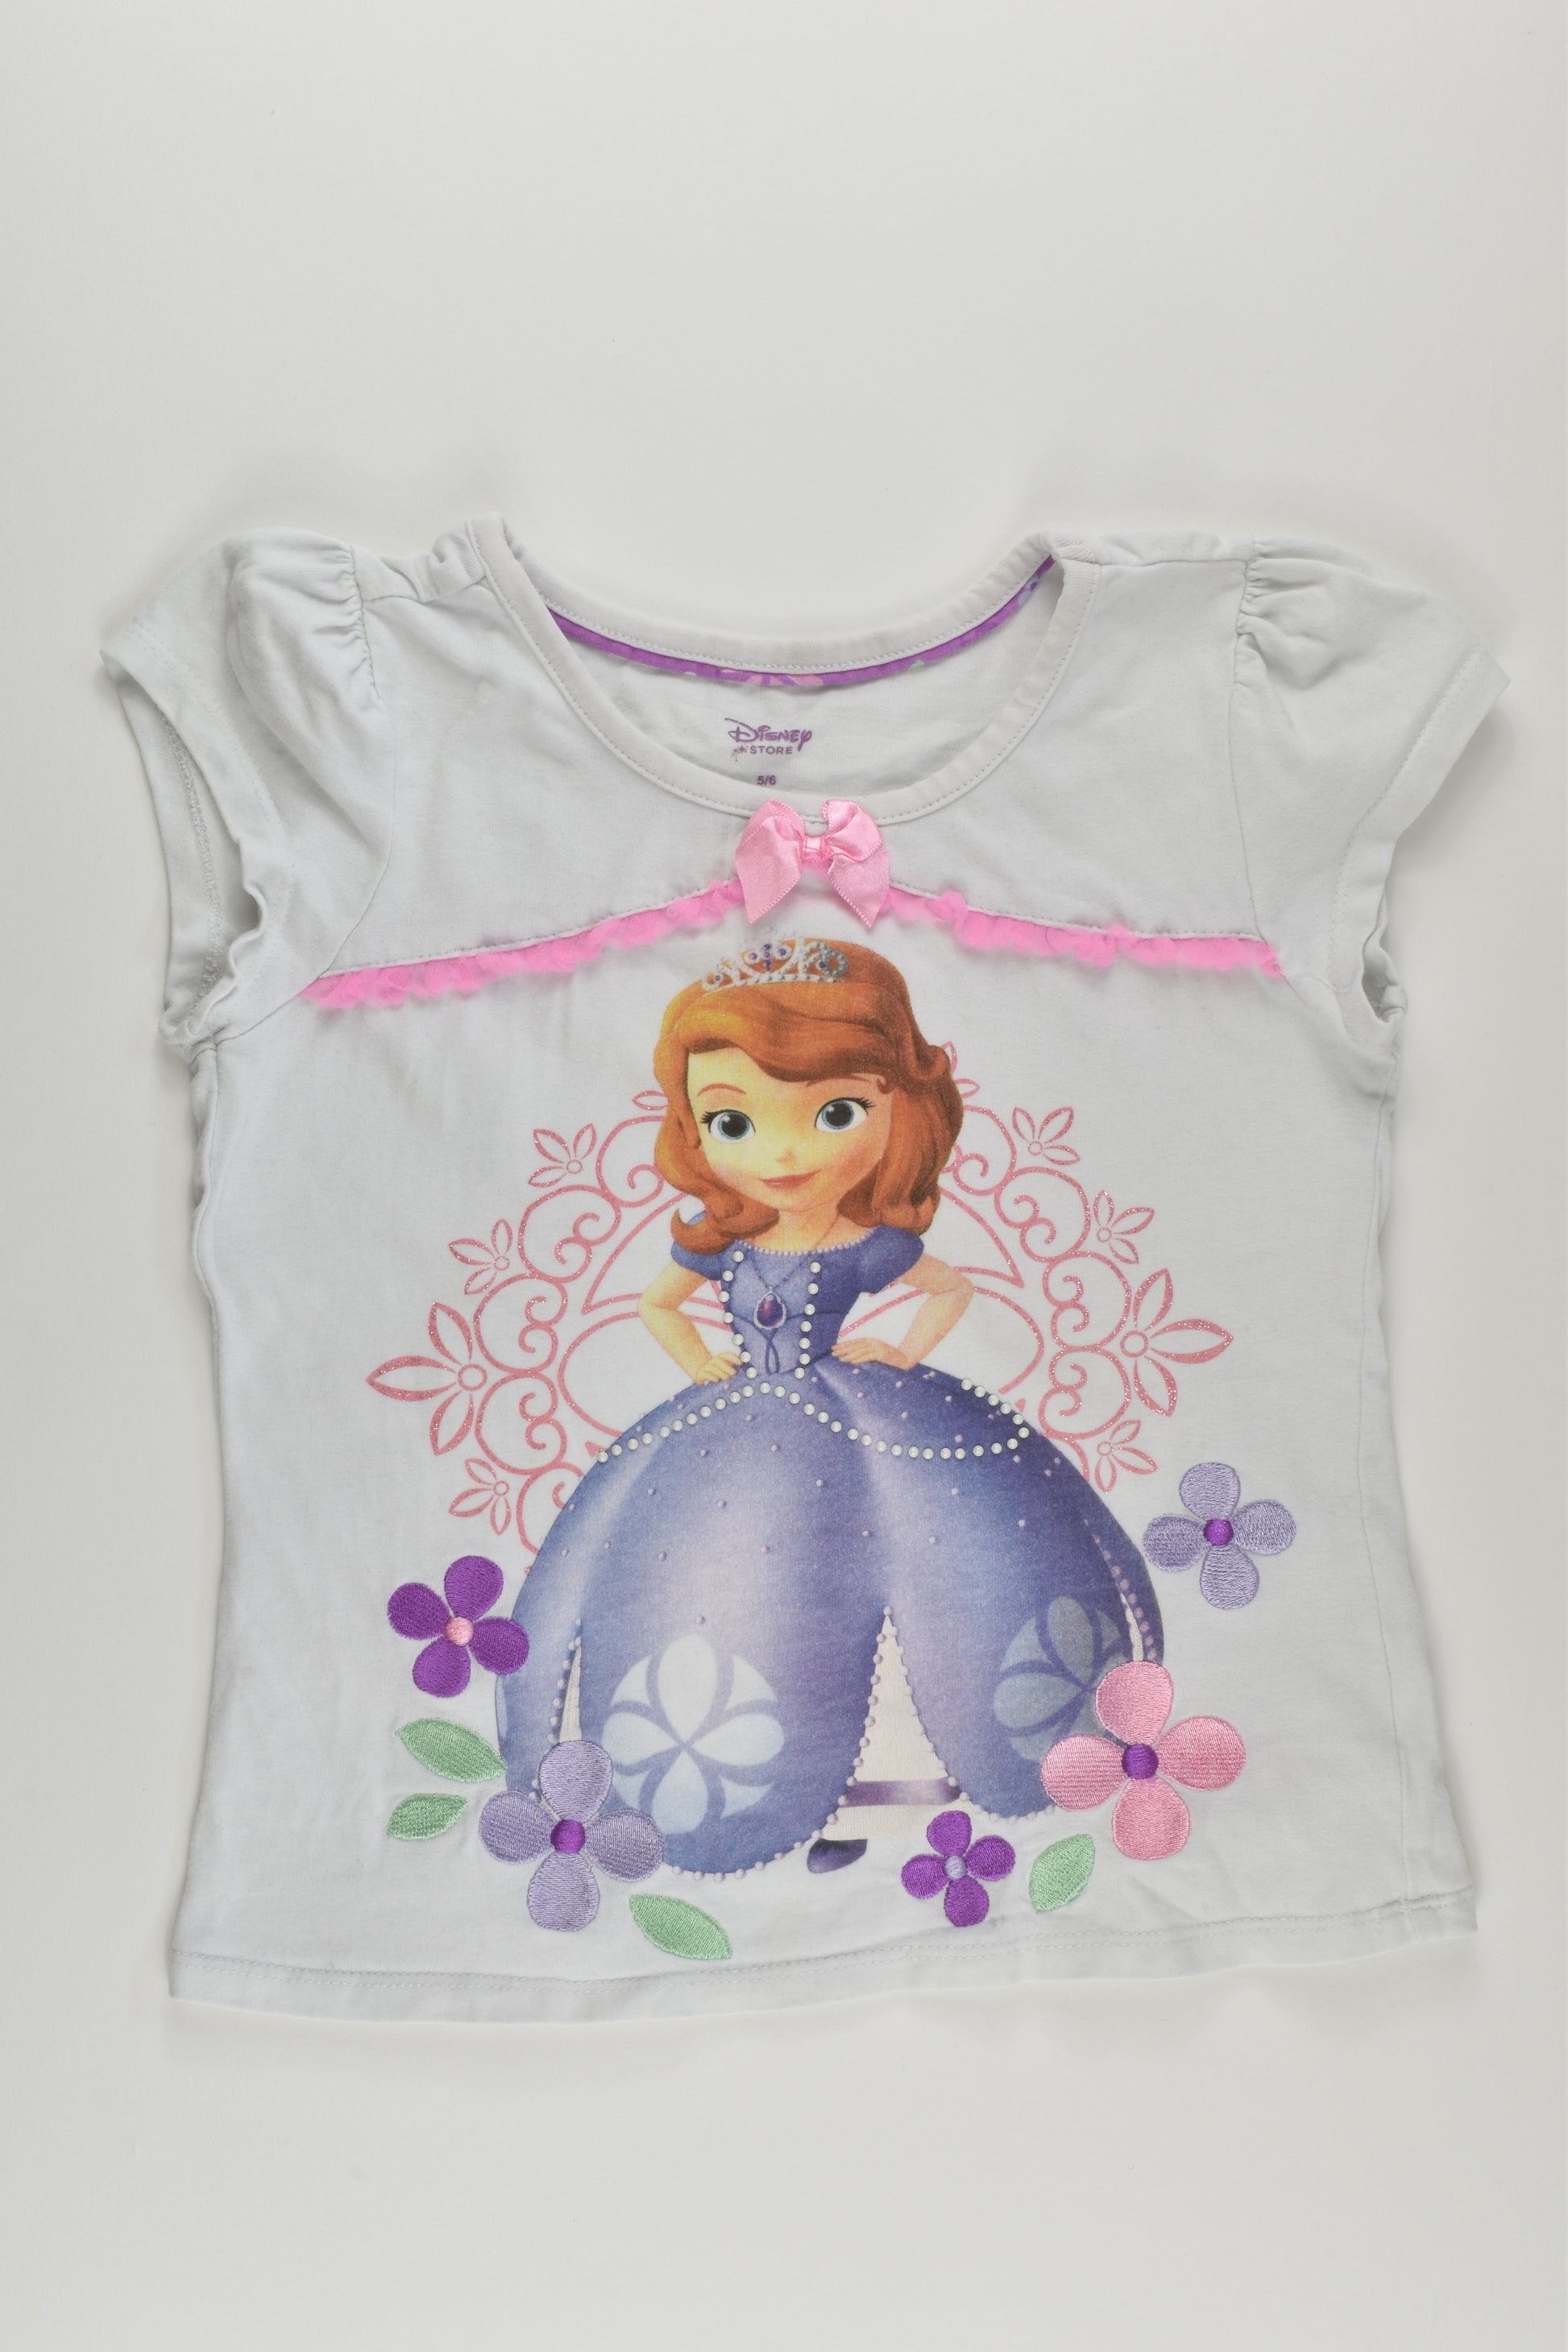 Disney Store Size 5/6 Princess Sophia T-shirt